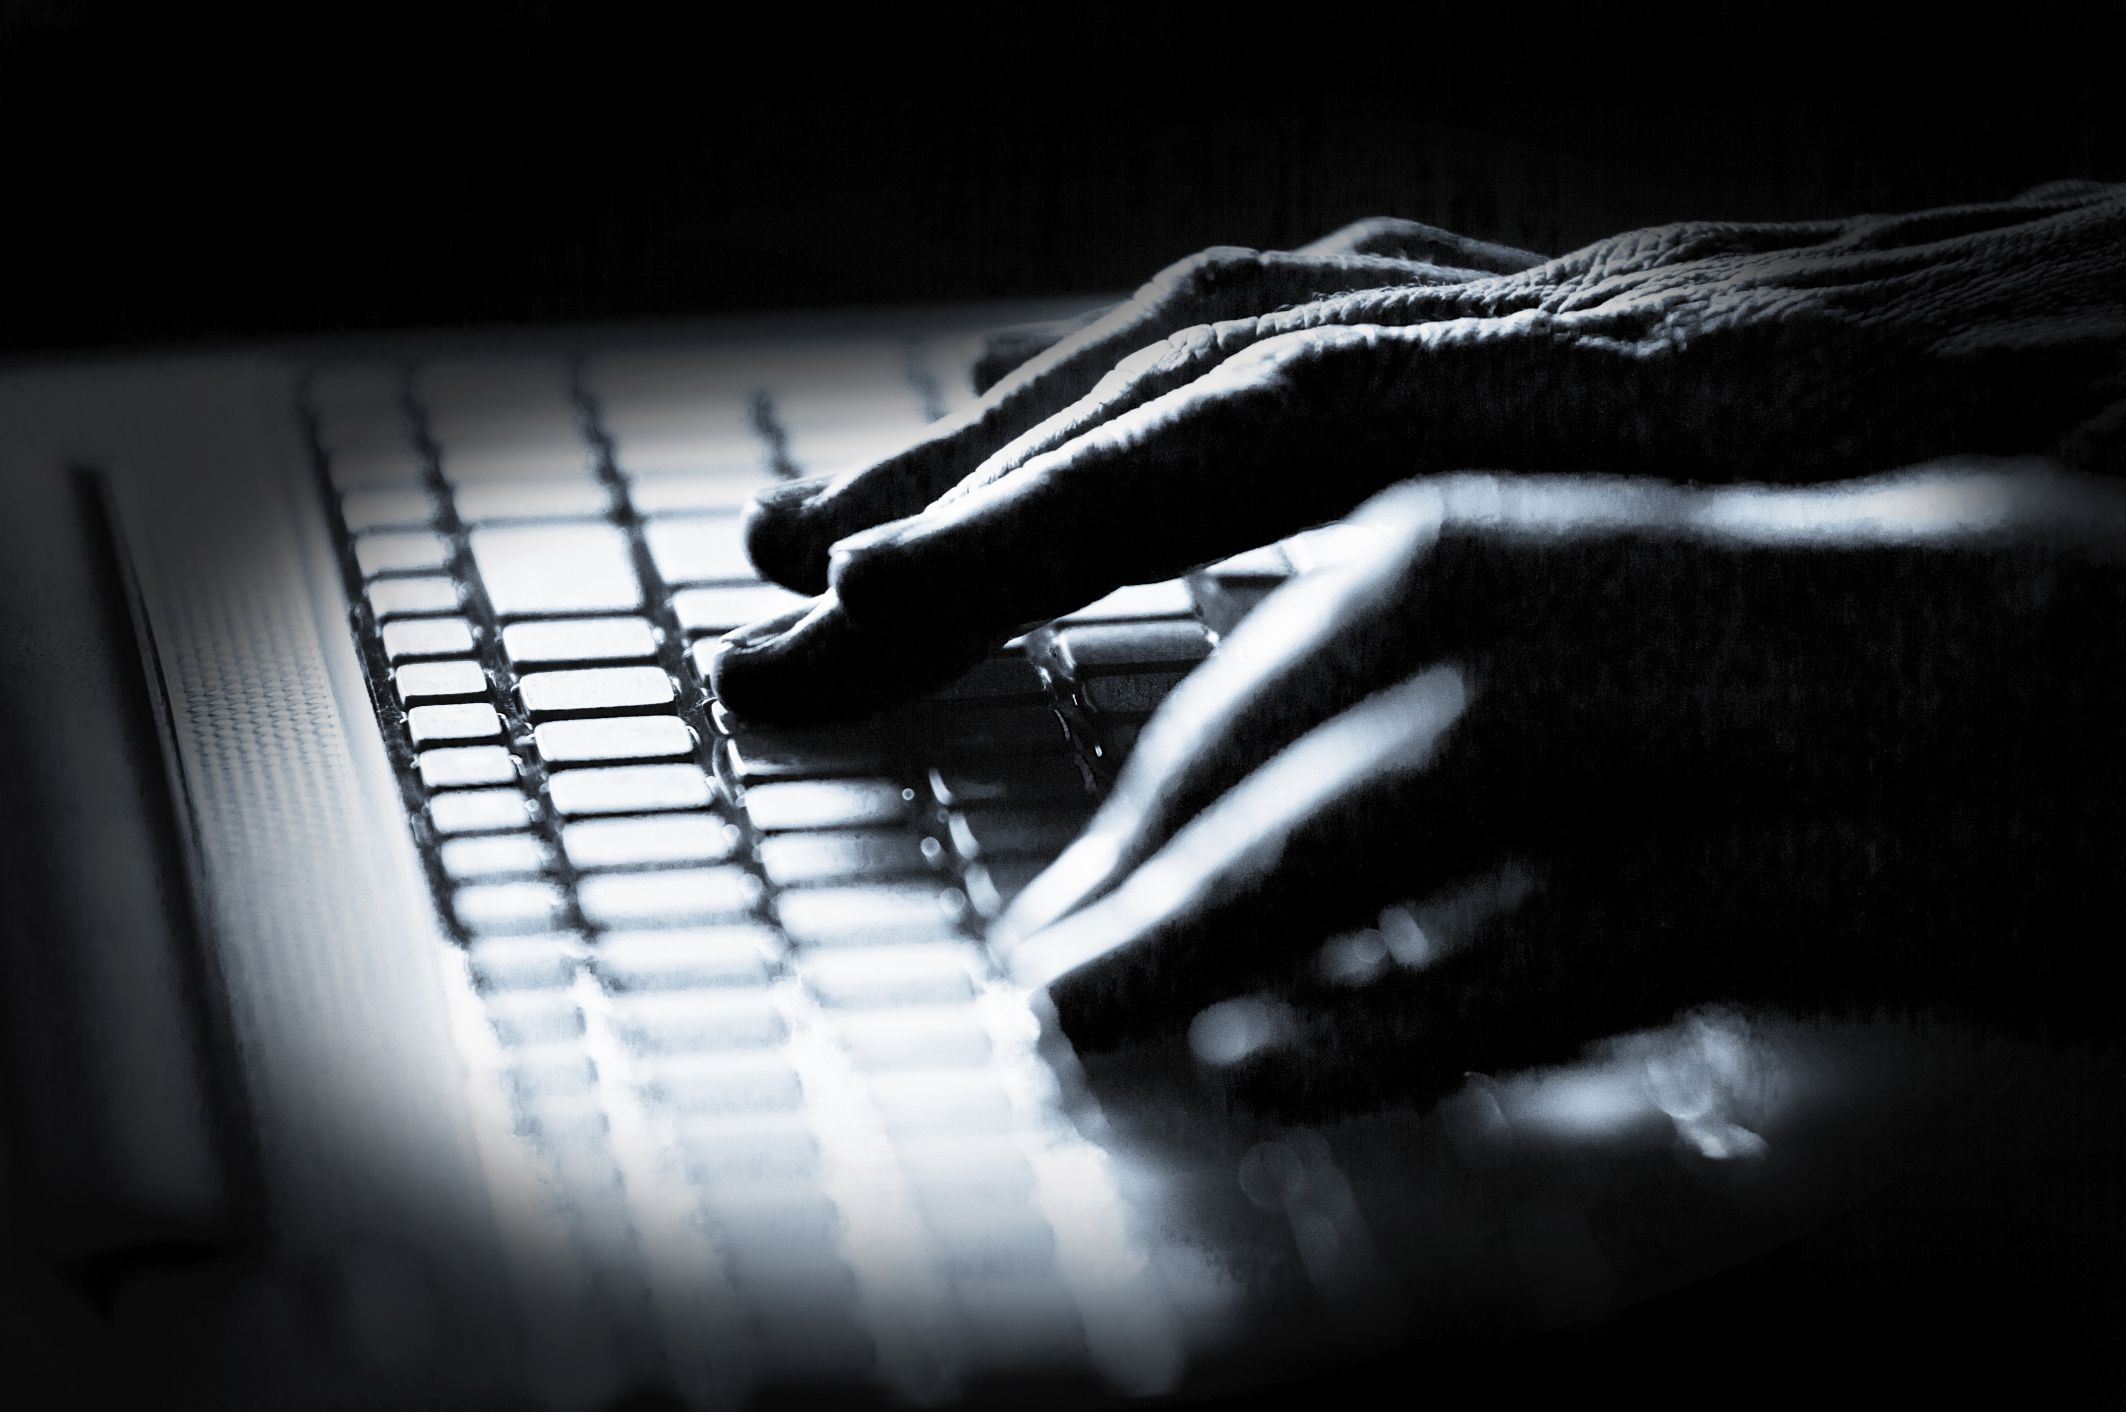 Principal Blackmail - 'Jilted' man's cyber attack on schoolgirl - NZ Herald